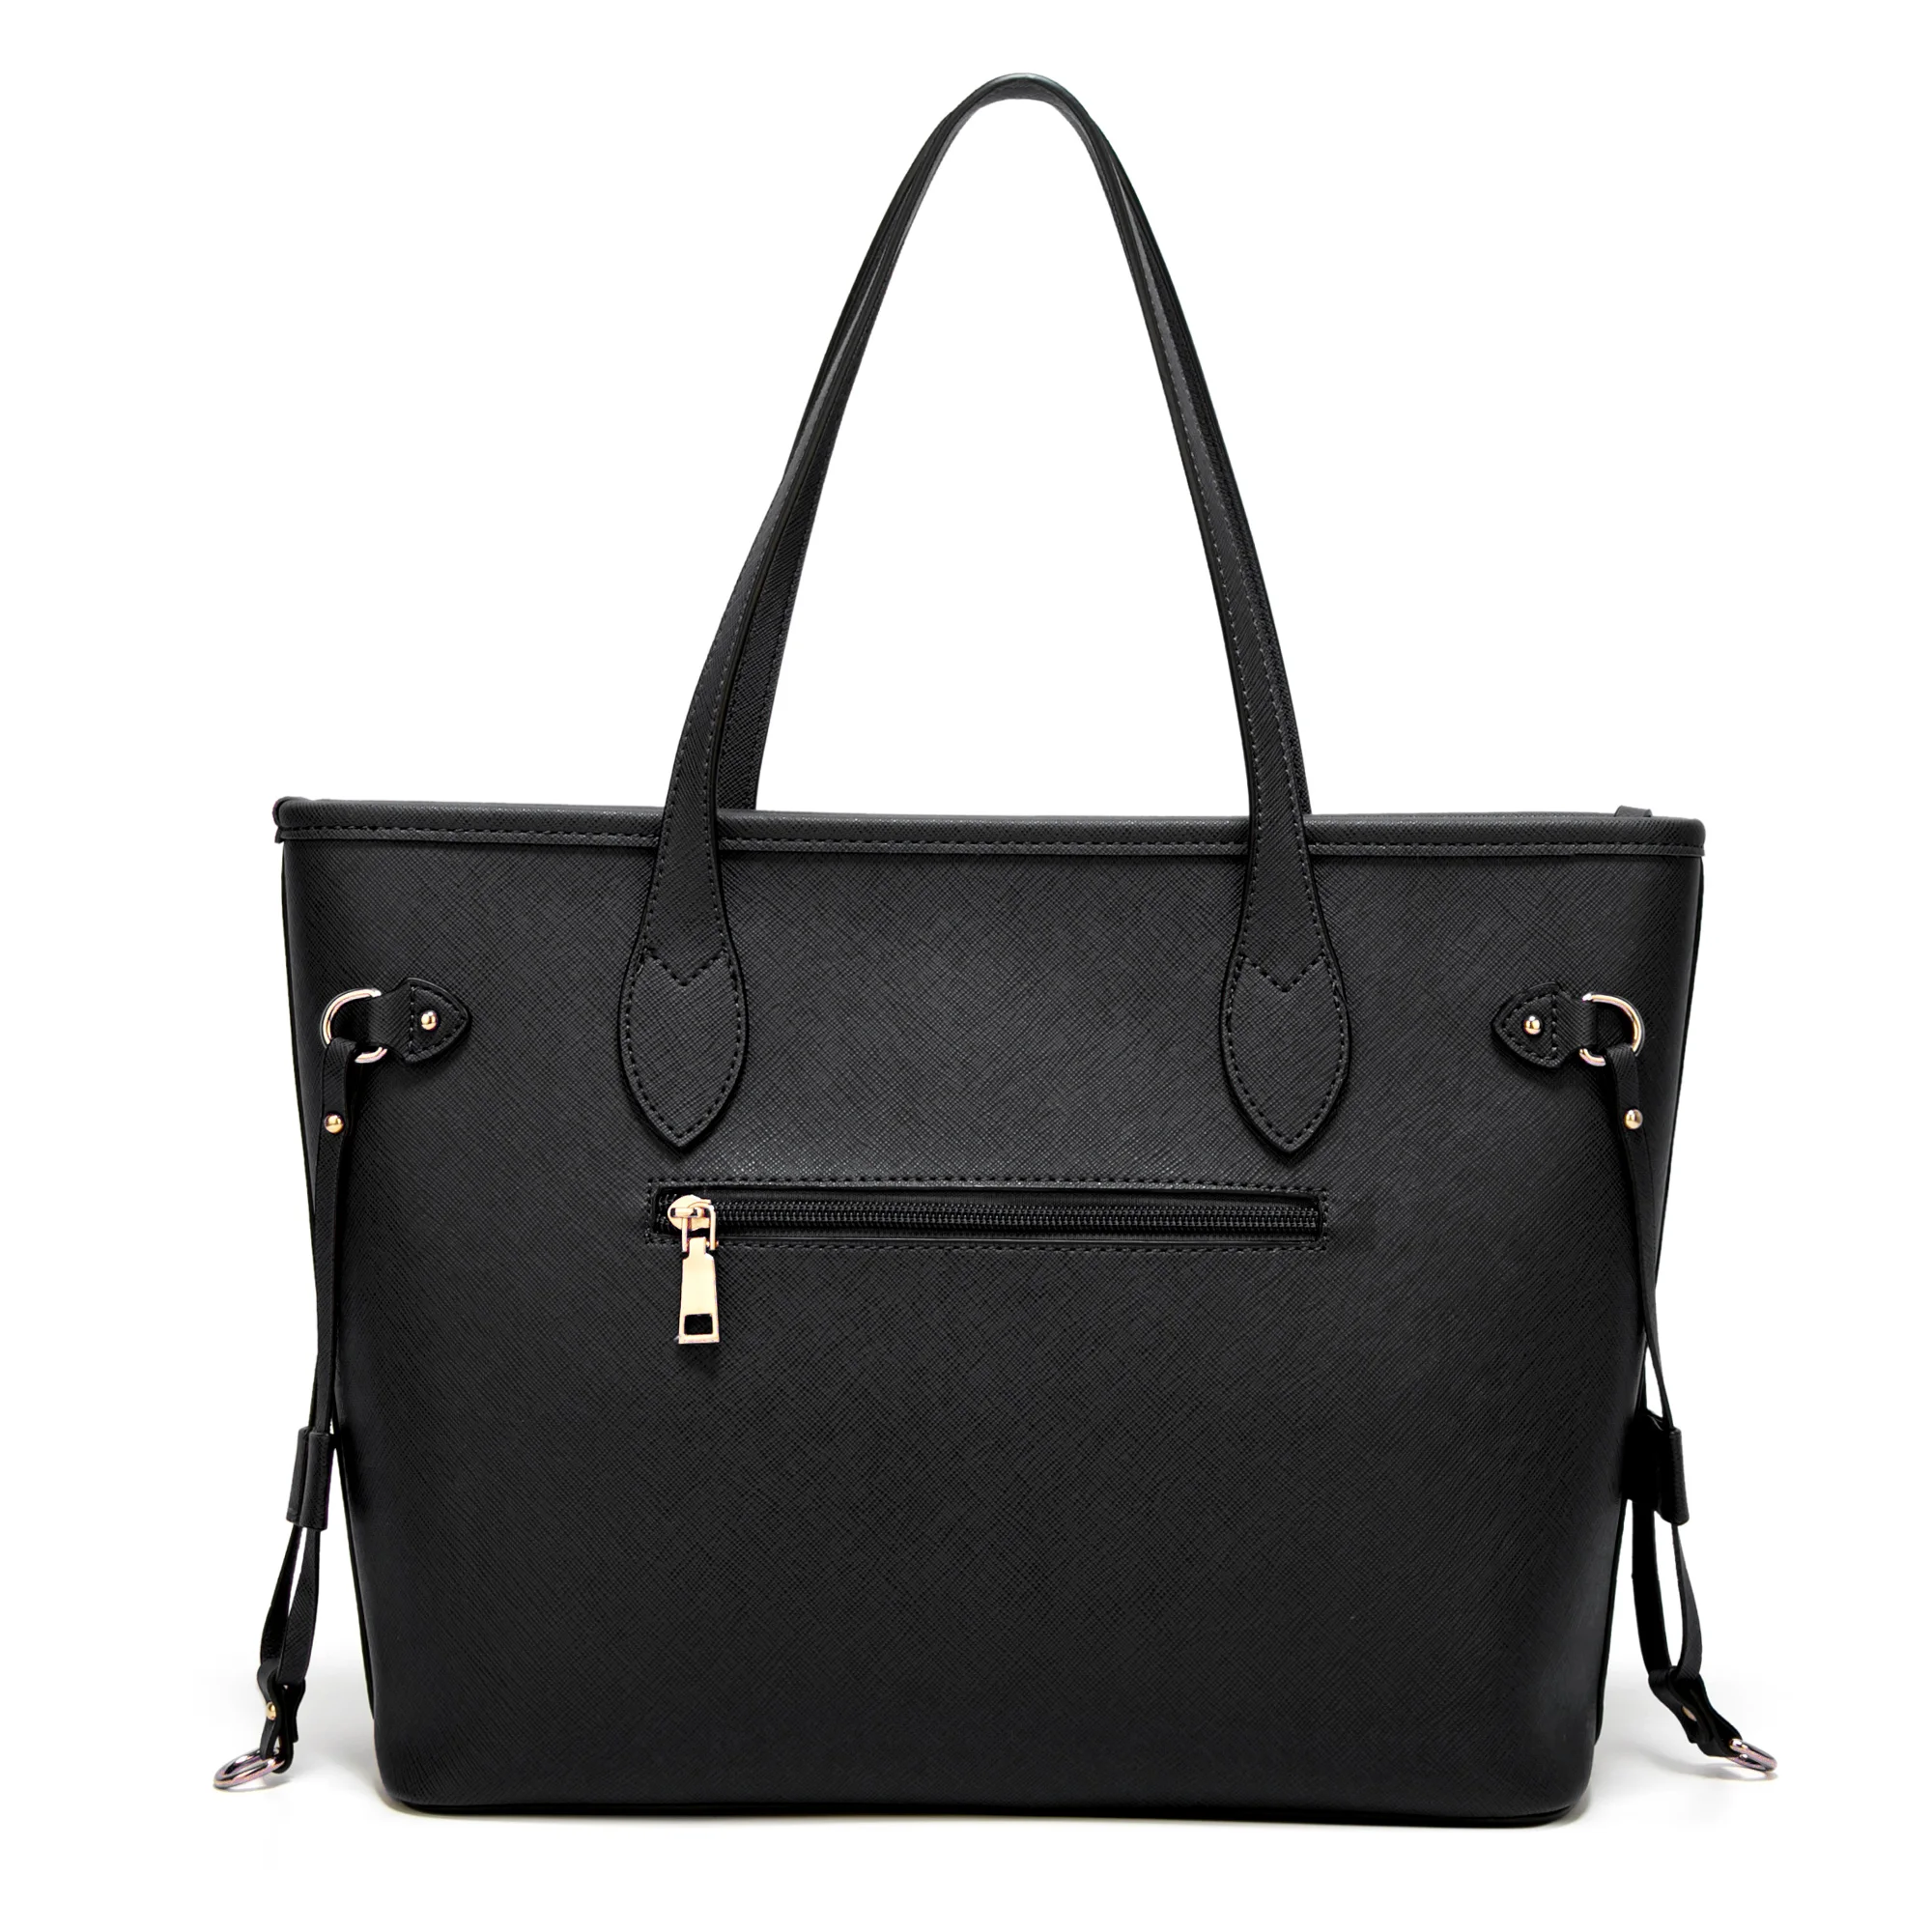 
Pink Satchel Purses and Handbags for Women Shoulder Tote Bags Wallets Top Handle Messenger Hobo 2pcs Set 